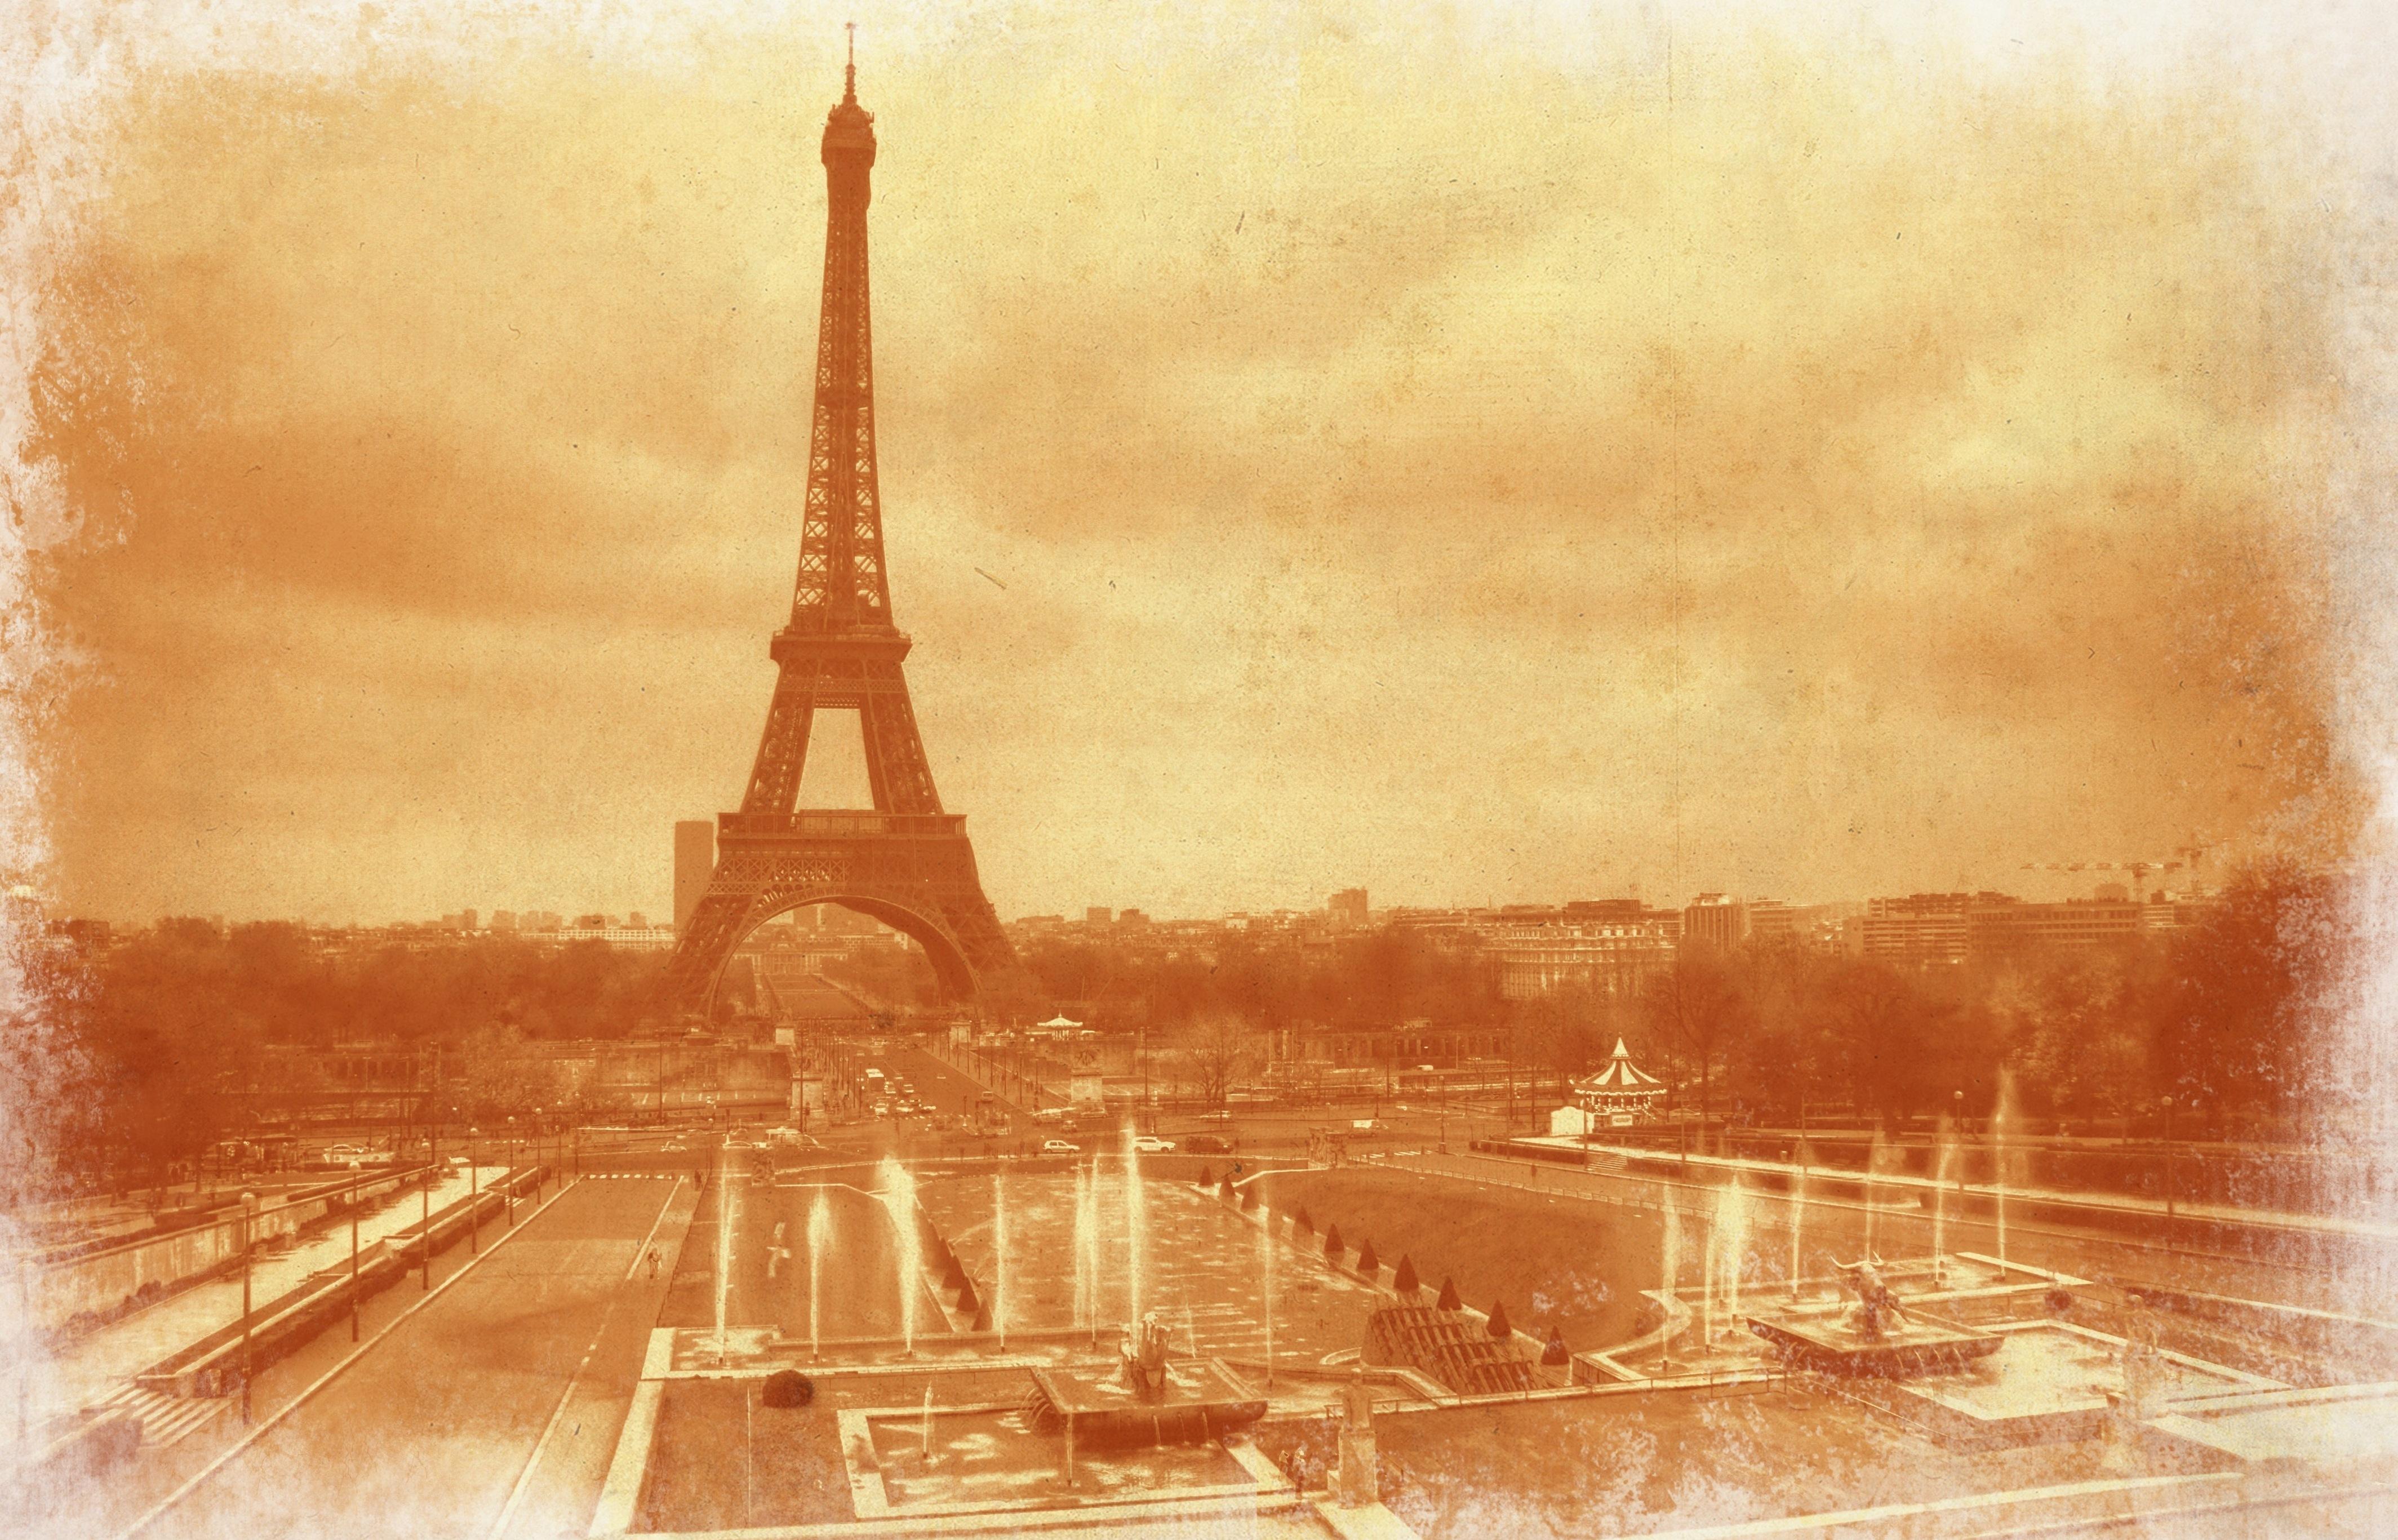 Free download Wallpaper Eiffel Tower Paris France in vintage